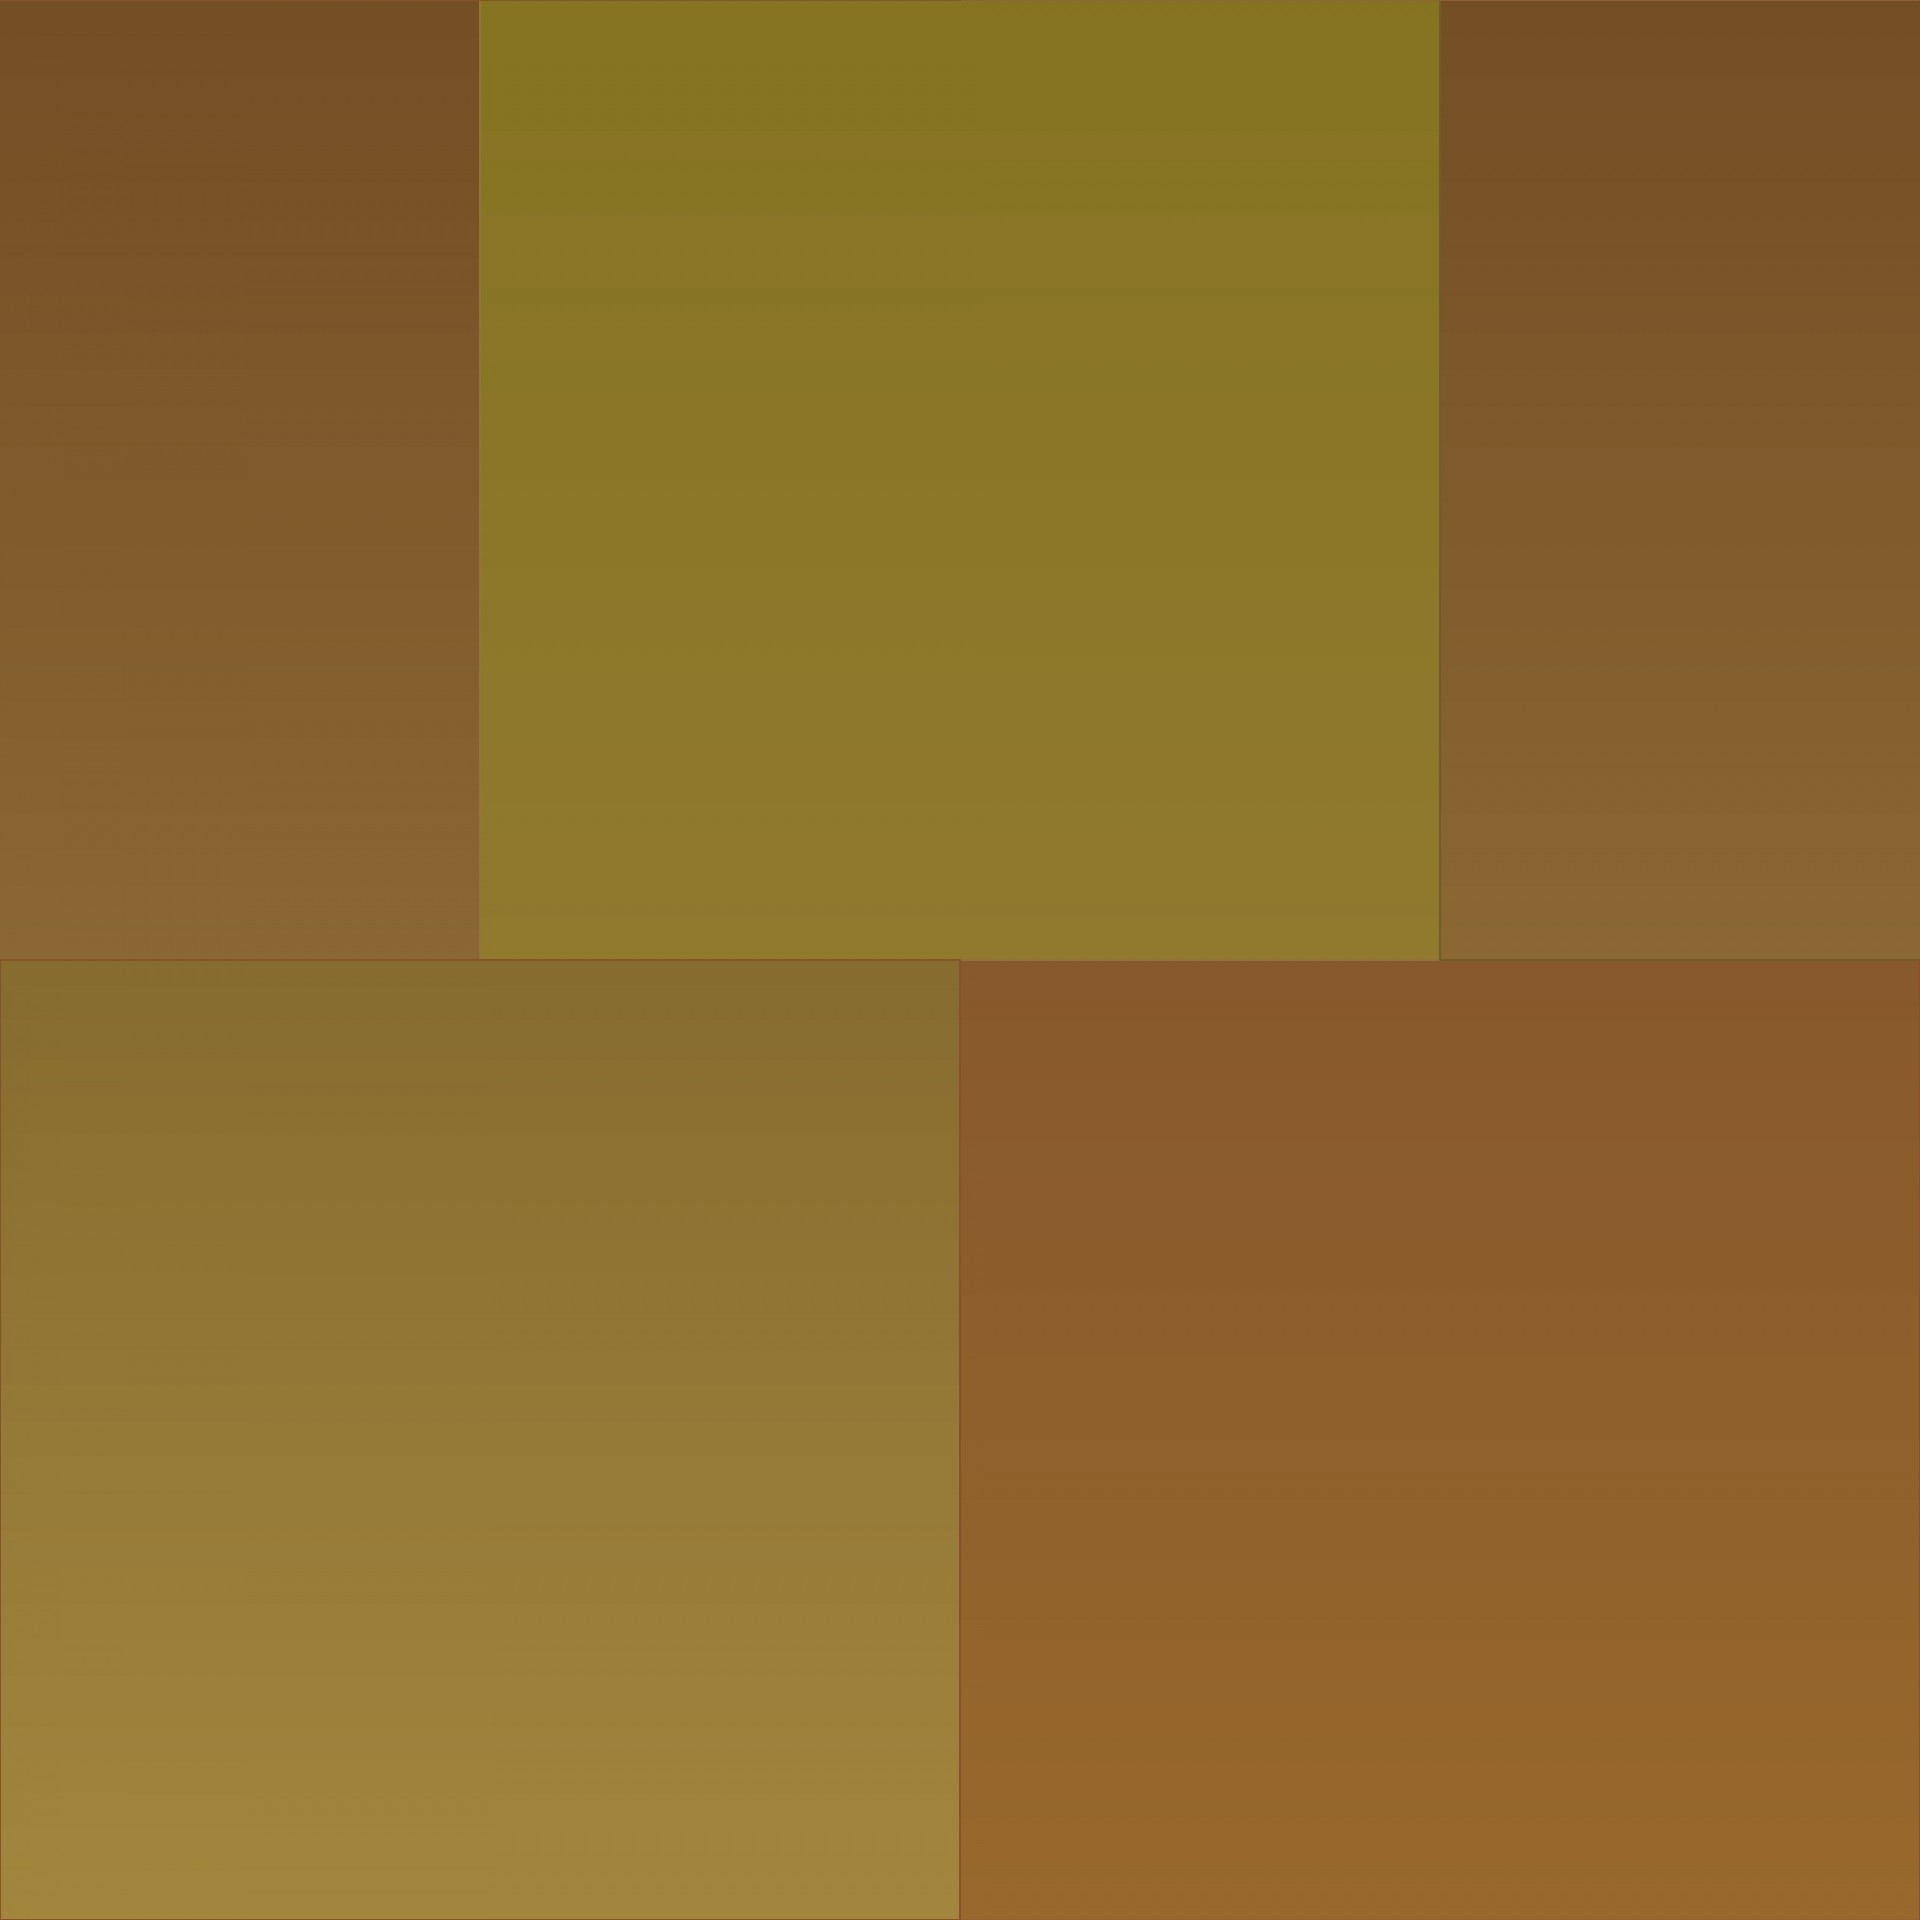 tiles gradient simple free photo